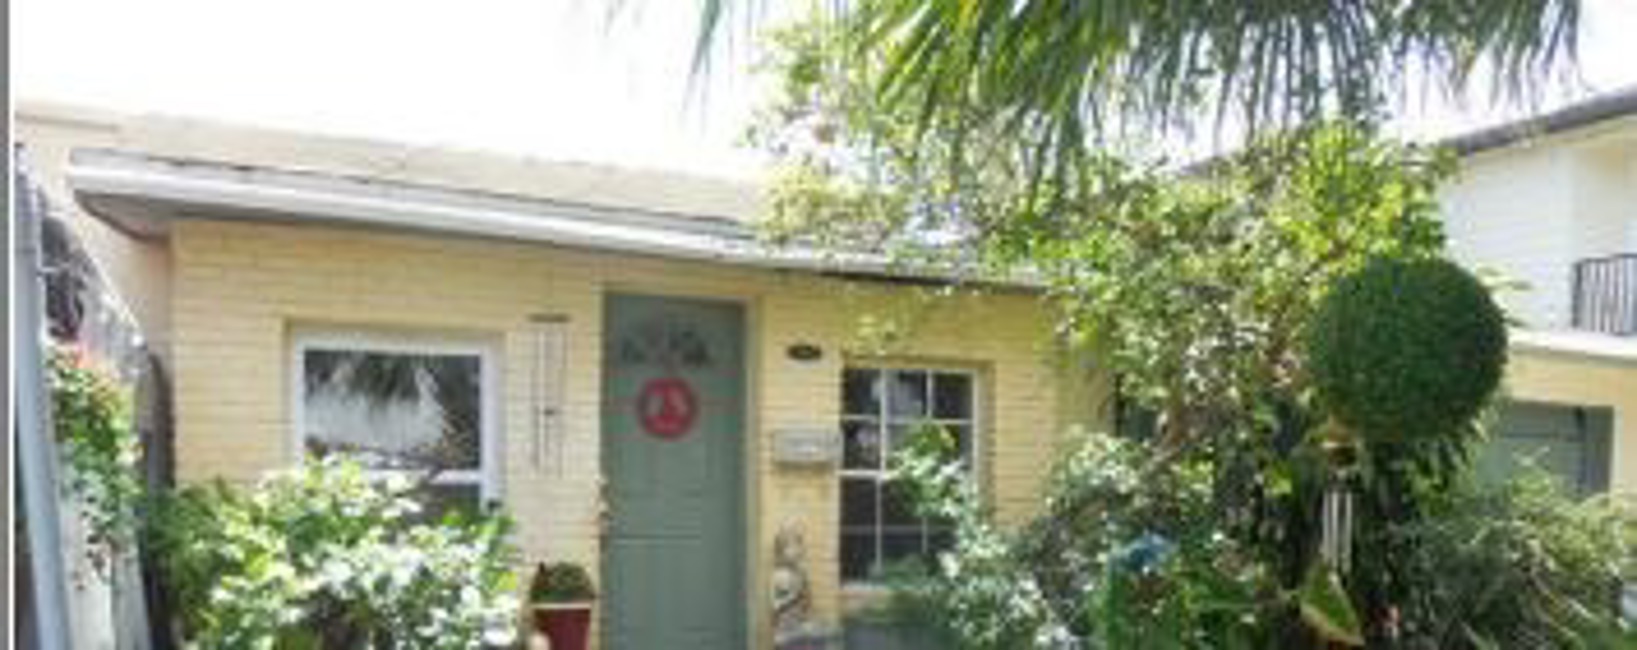 Foreclosure Trustee, 2841 Sw 38TH, Miami, FL 33134